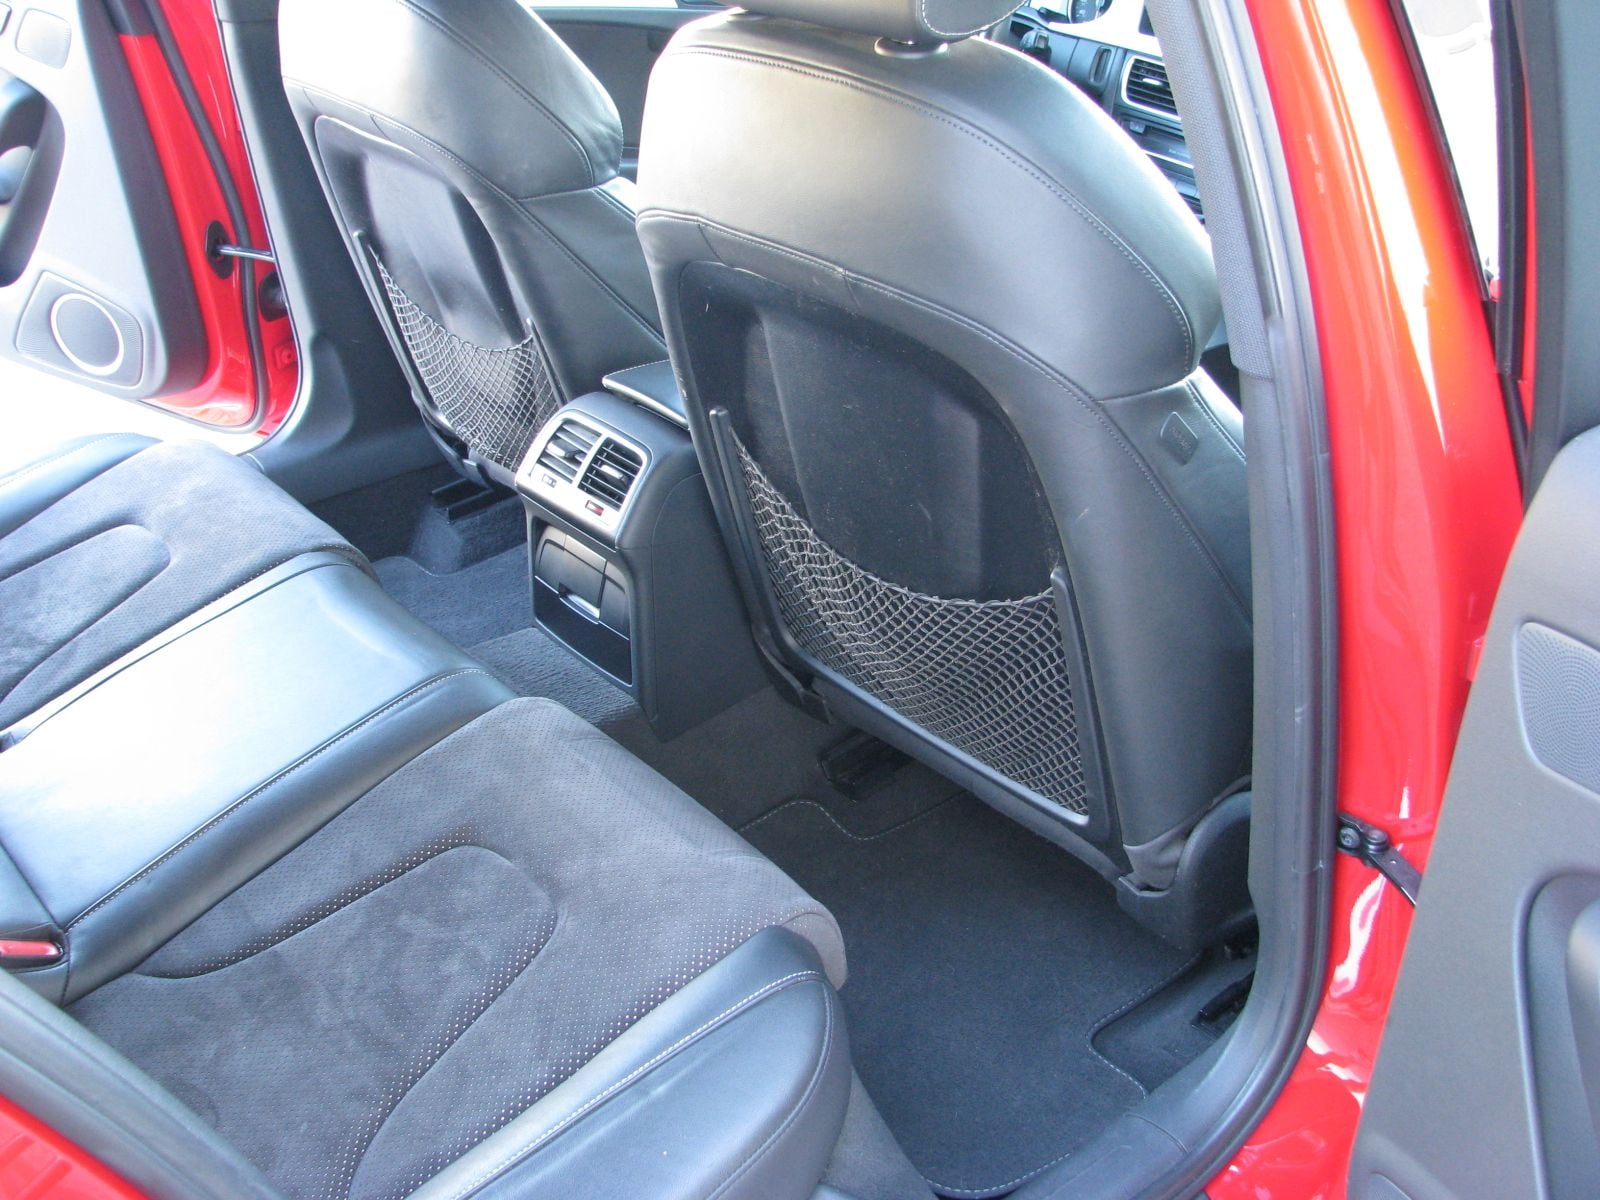 2011 Audi A4 Quattro - F/S Misano Red Pearl Audi A4 Avant - Full Service History / Loaded / Beautiful - Used - VIN WAU4FBFL0BA083601 - 131,000 Miles - 4 cyl - 4WD - Automatic - Wagon - Red - Vista, CA 92084, United States